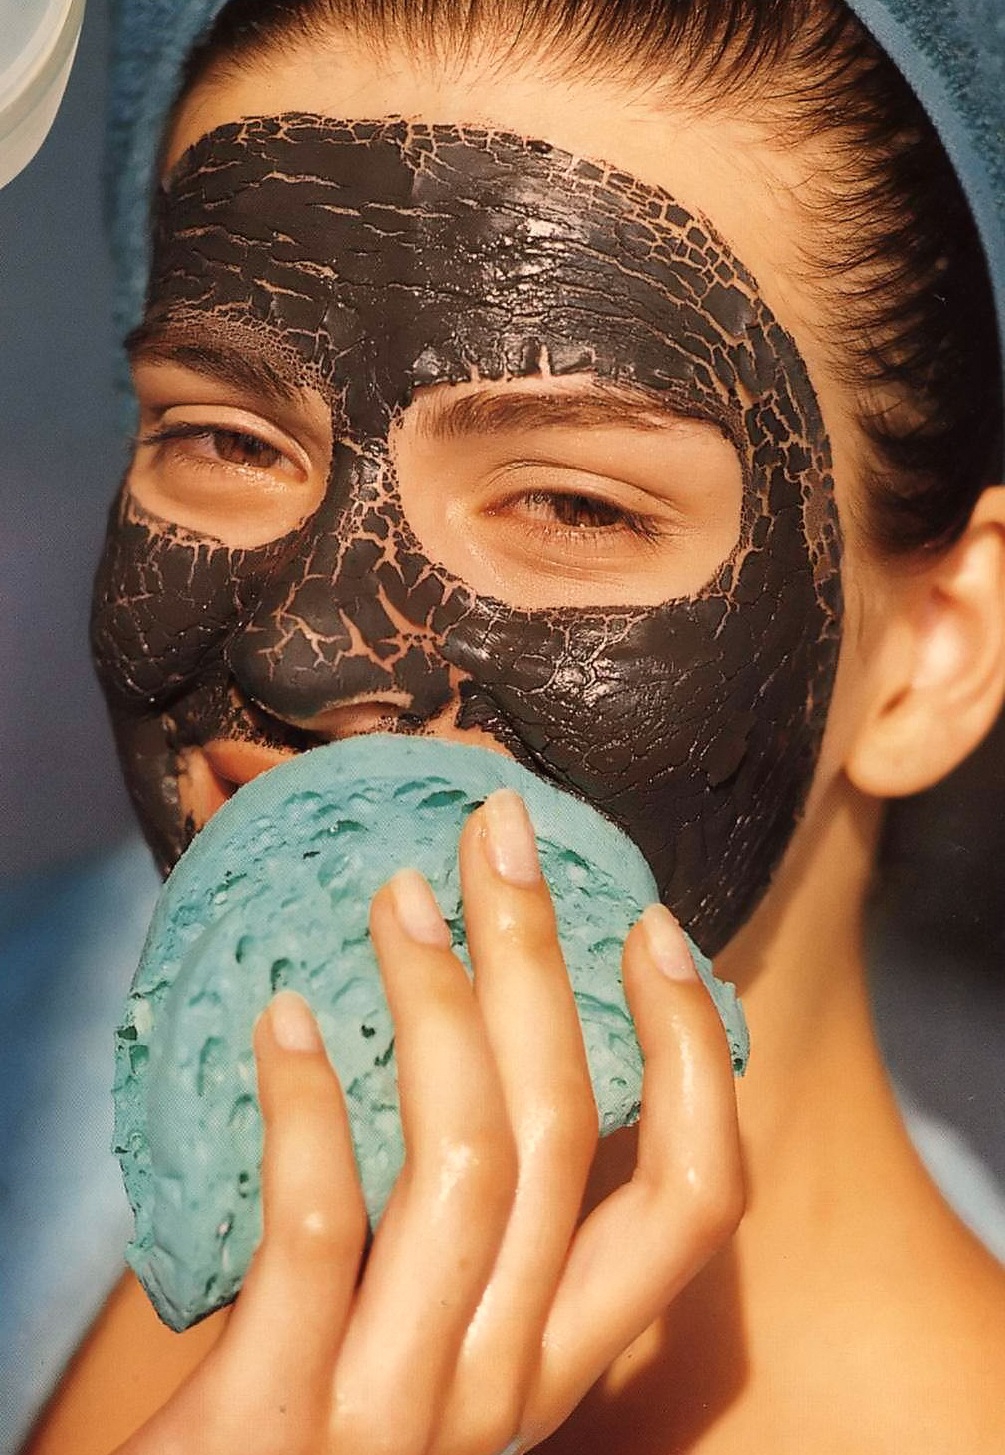 Наносить маску раз в неделю. Маска для лица. М̆̈ӑ̈с̆̈к̆̈й̈ д̆̈л̆̈я̆̈ л̆̈й̈ц̆̈ӑ̈. Глиняная маска для лица. Маска из глины для лица.